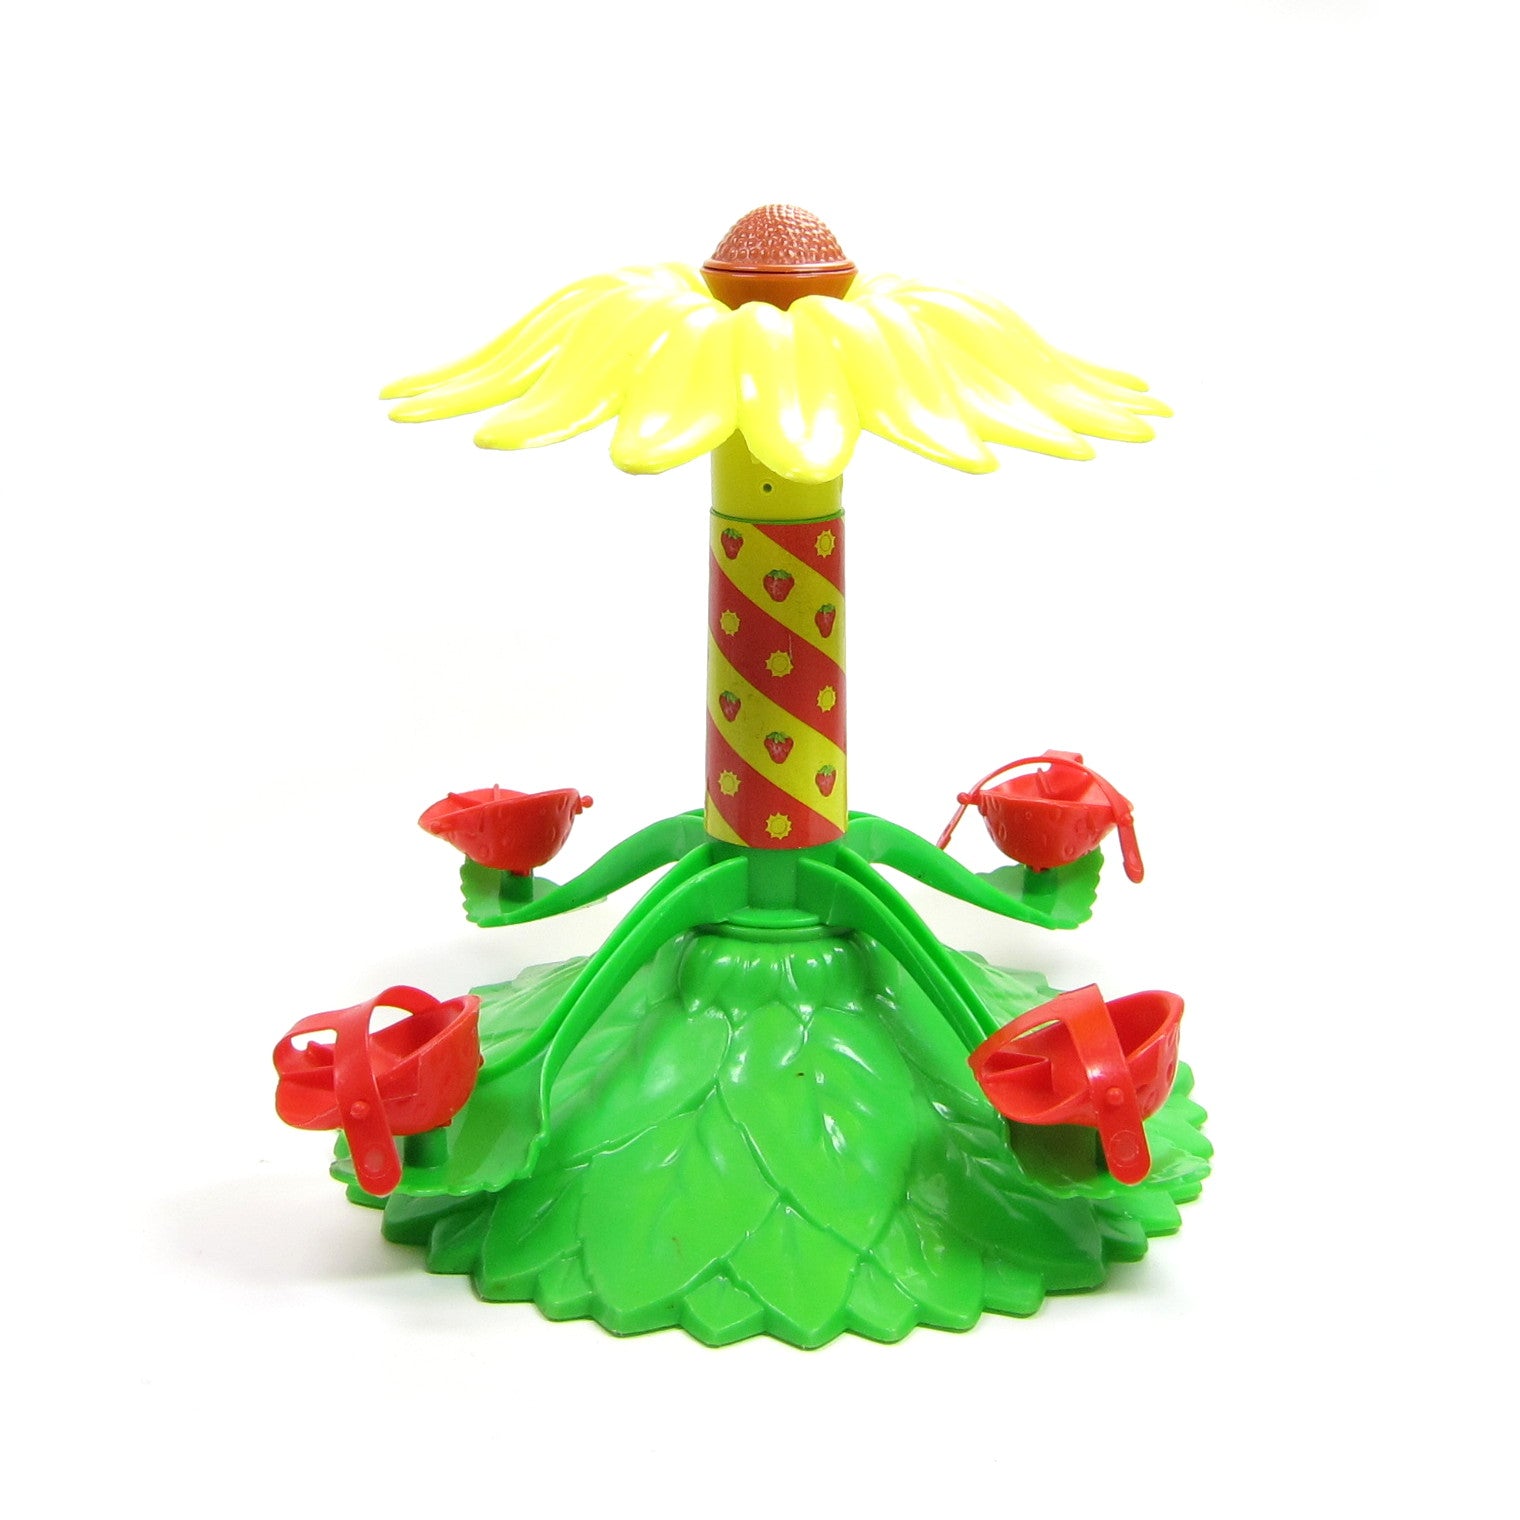 Strawberry Shortcake Carousel toy yellow flower